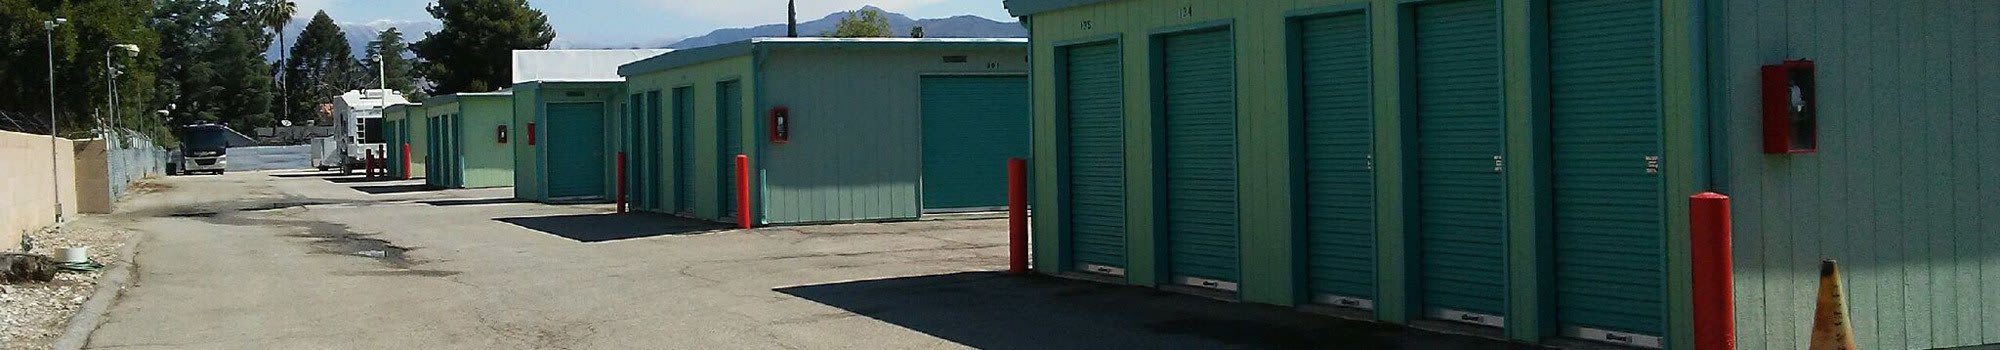 Photos of Handi Storage in Calimesa, California